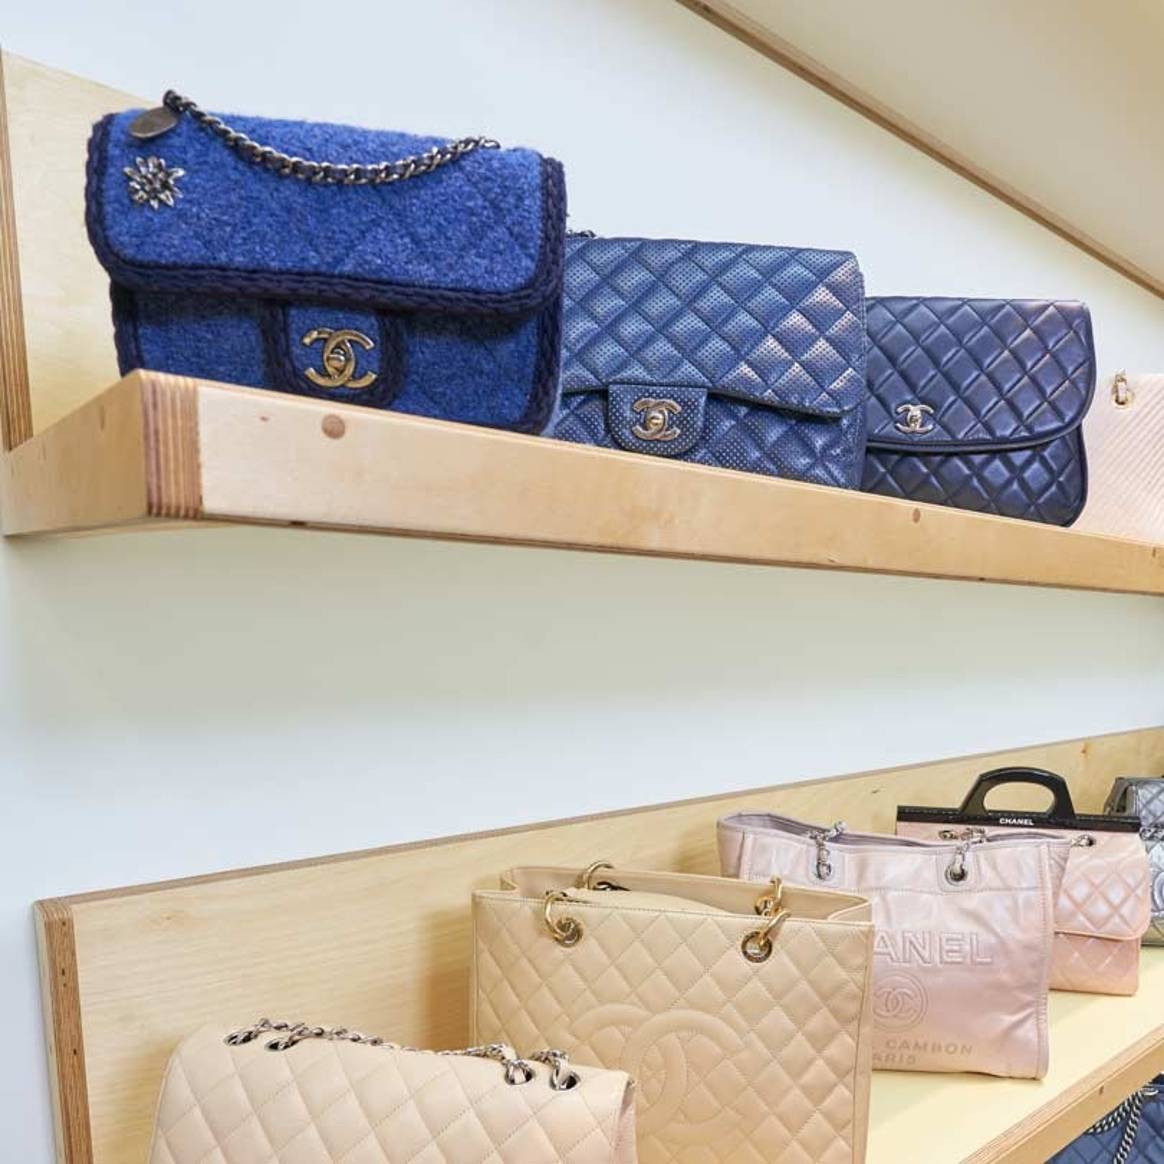 Rebag expands beyond handbags into new accessory categories